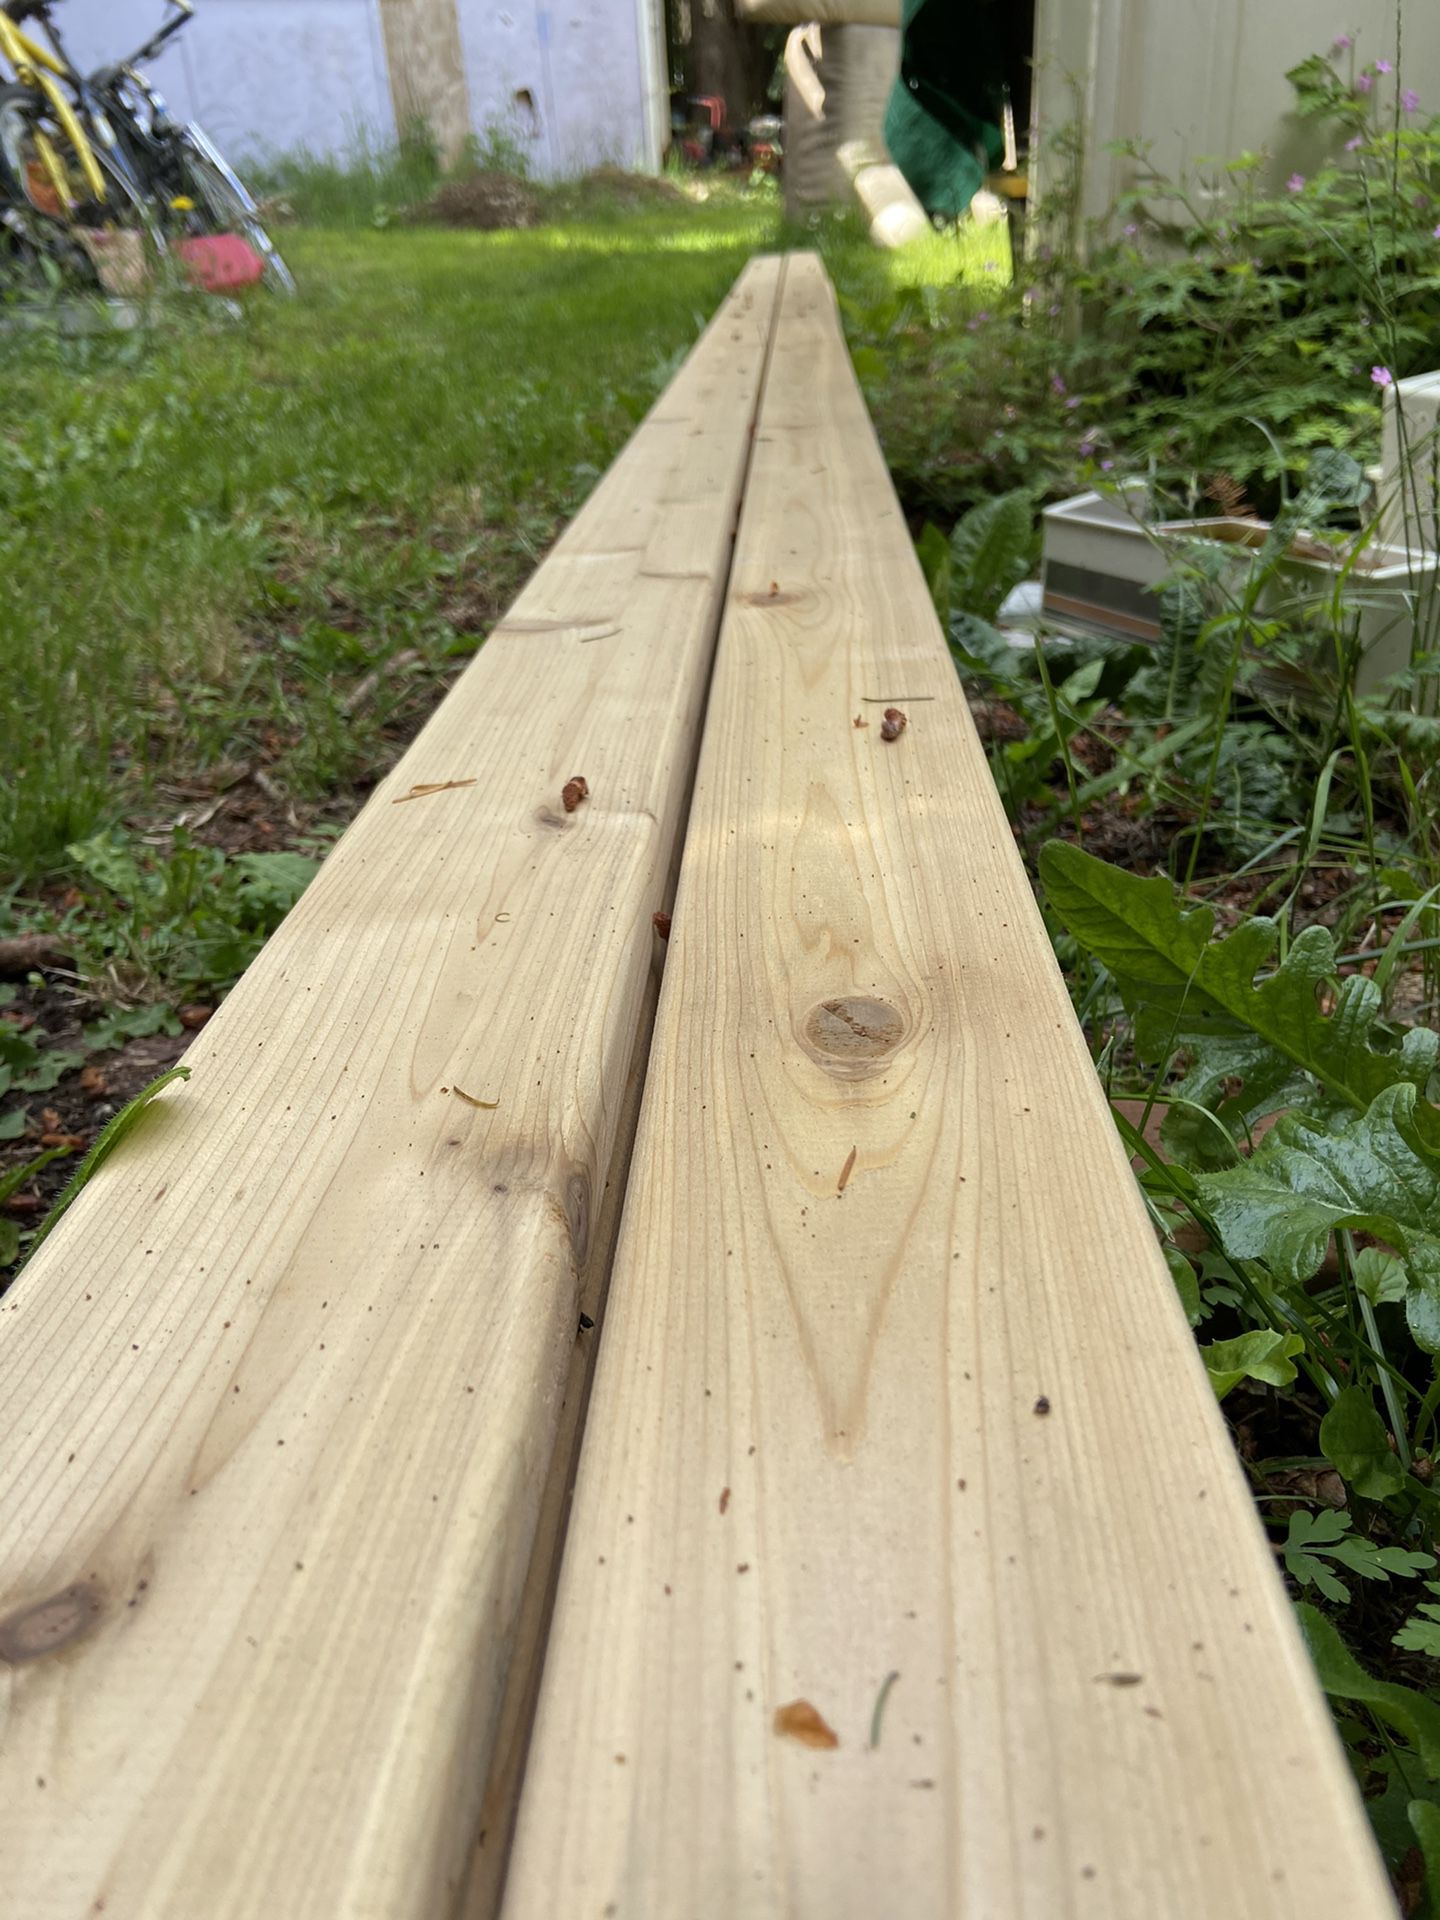 Brand New Cedar Decking Boards 1x4x16’ 10 boards total